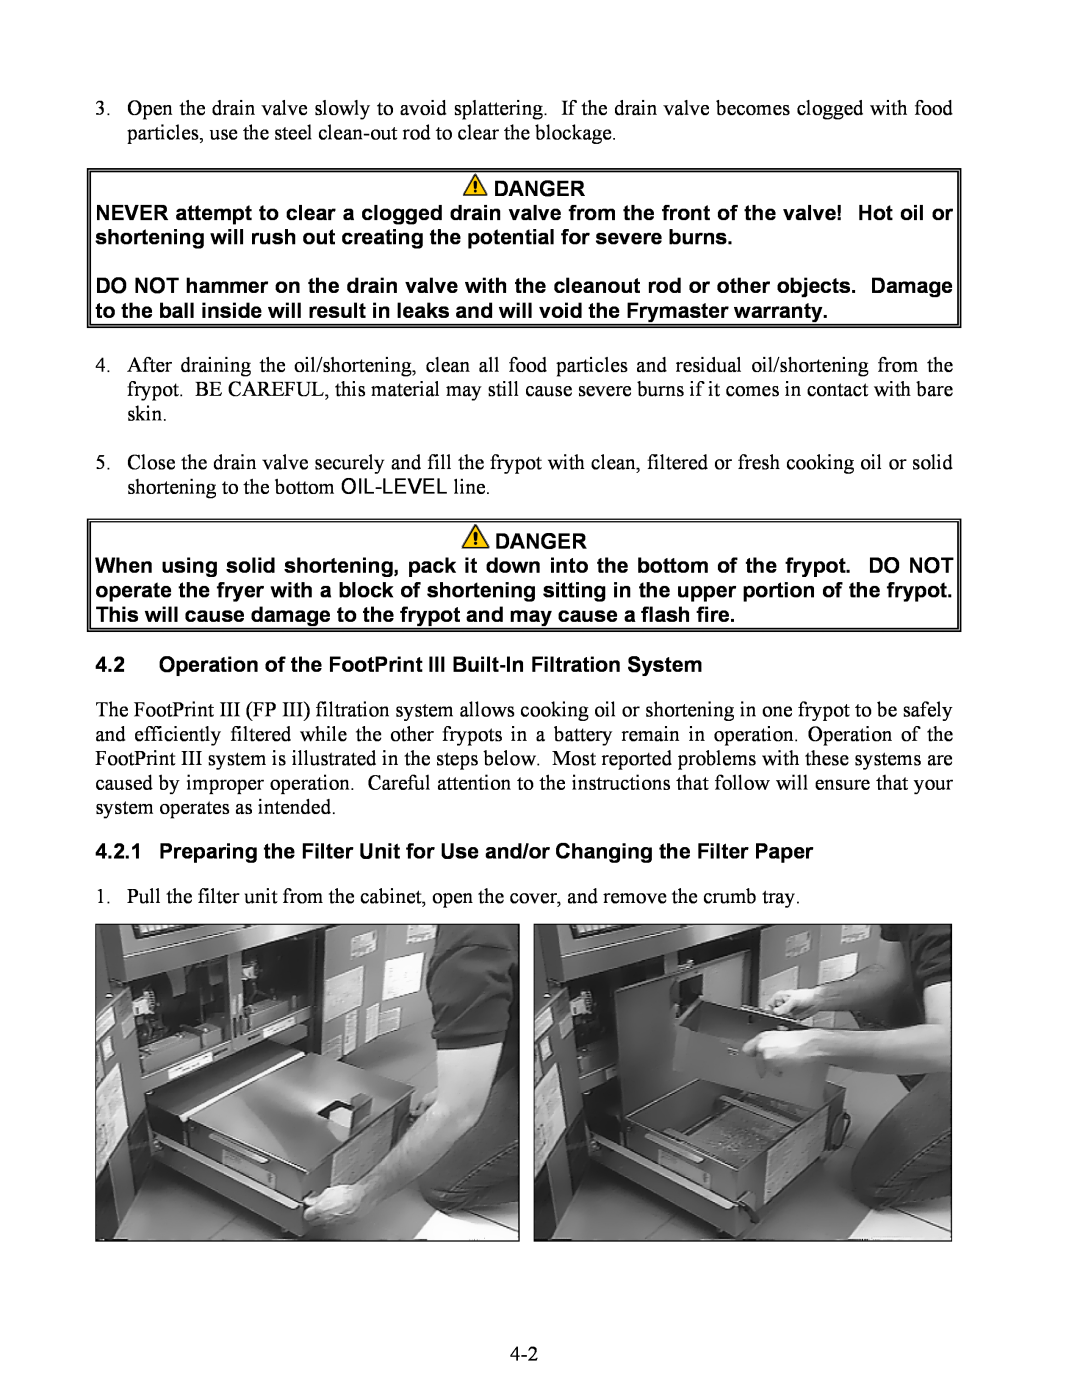 Frymaster 47 Series operation manual Danger 